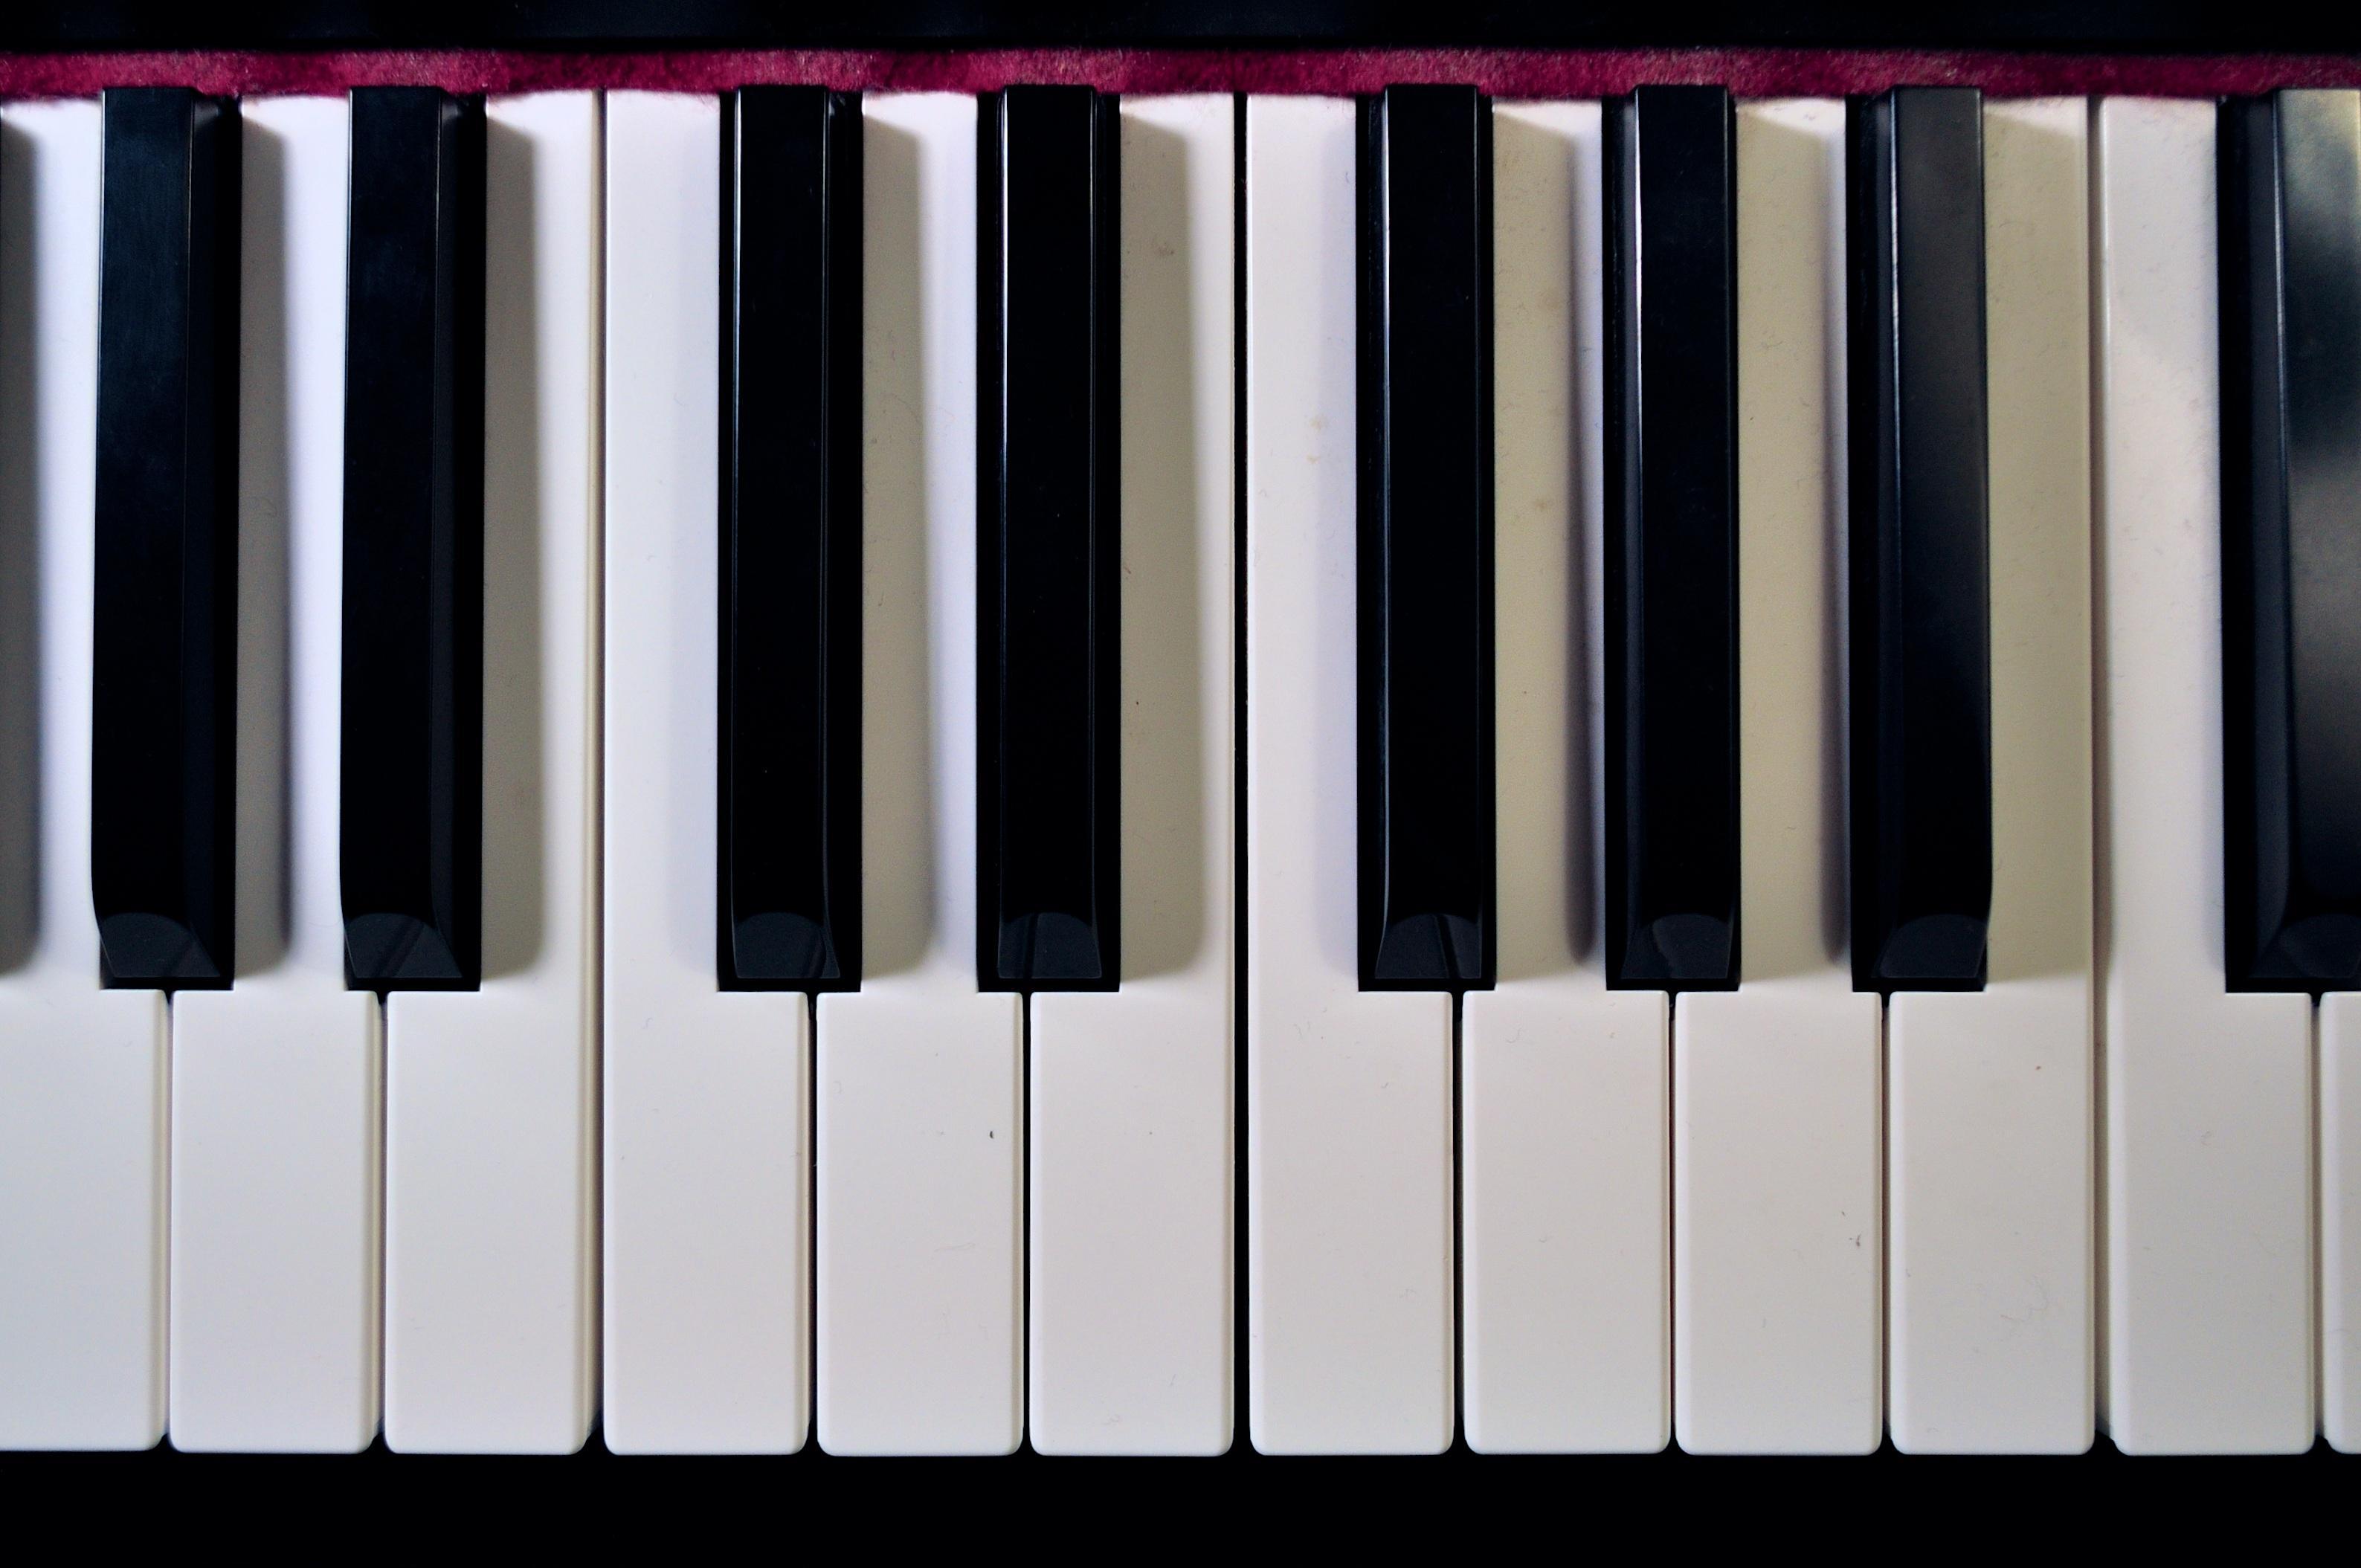 Фортепиано белые клавиши. Клавиатура пиано. Фортепианная клавиатура. Клавиатура пианино. Клавиши фортепиано.